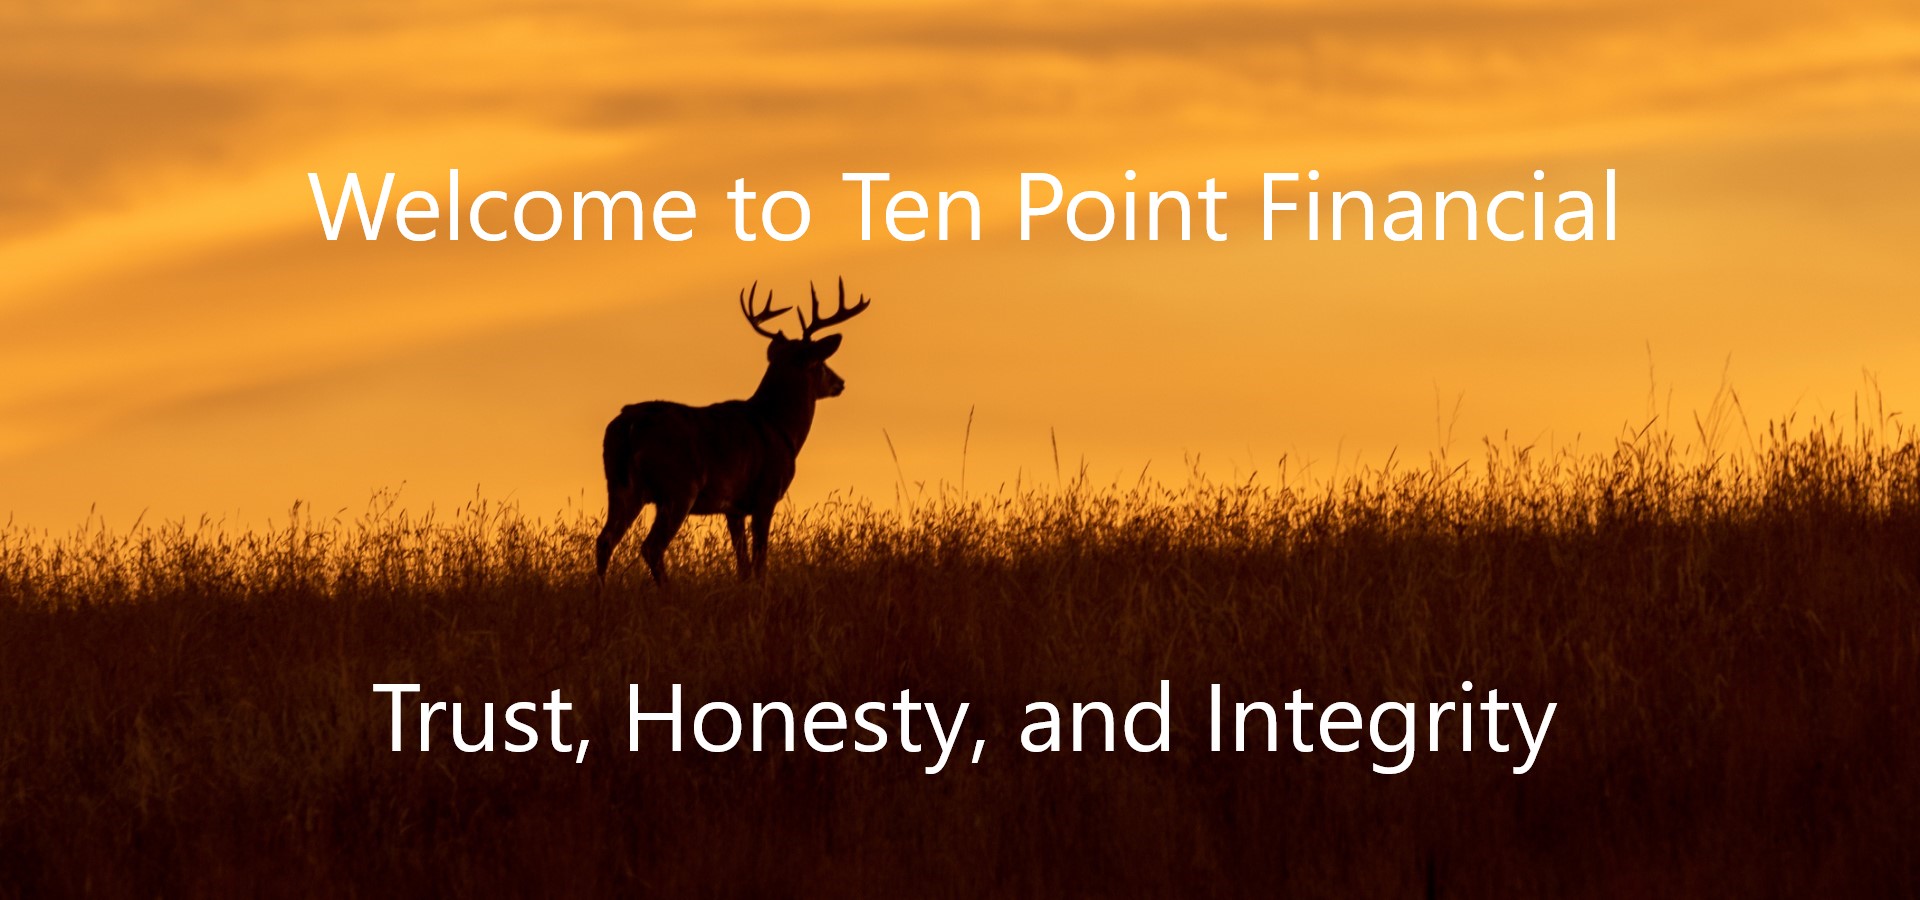 Ten Point Financial